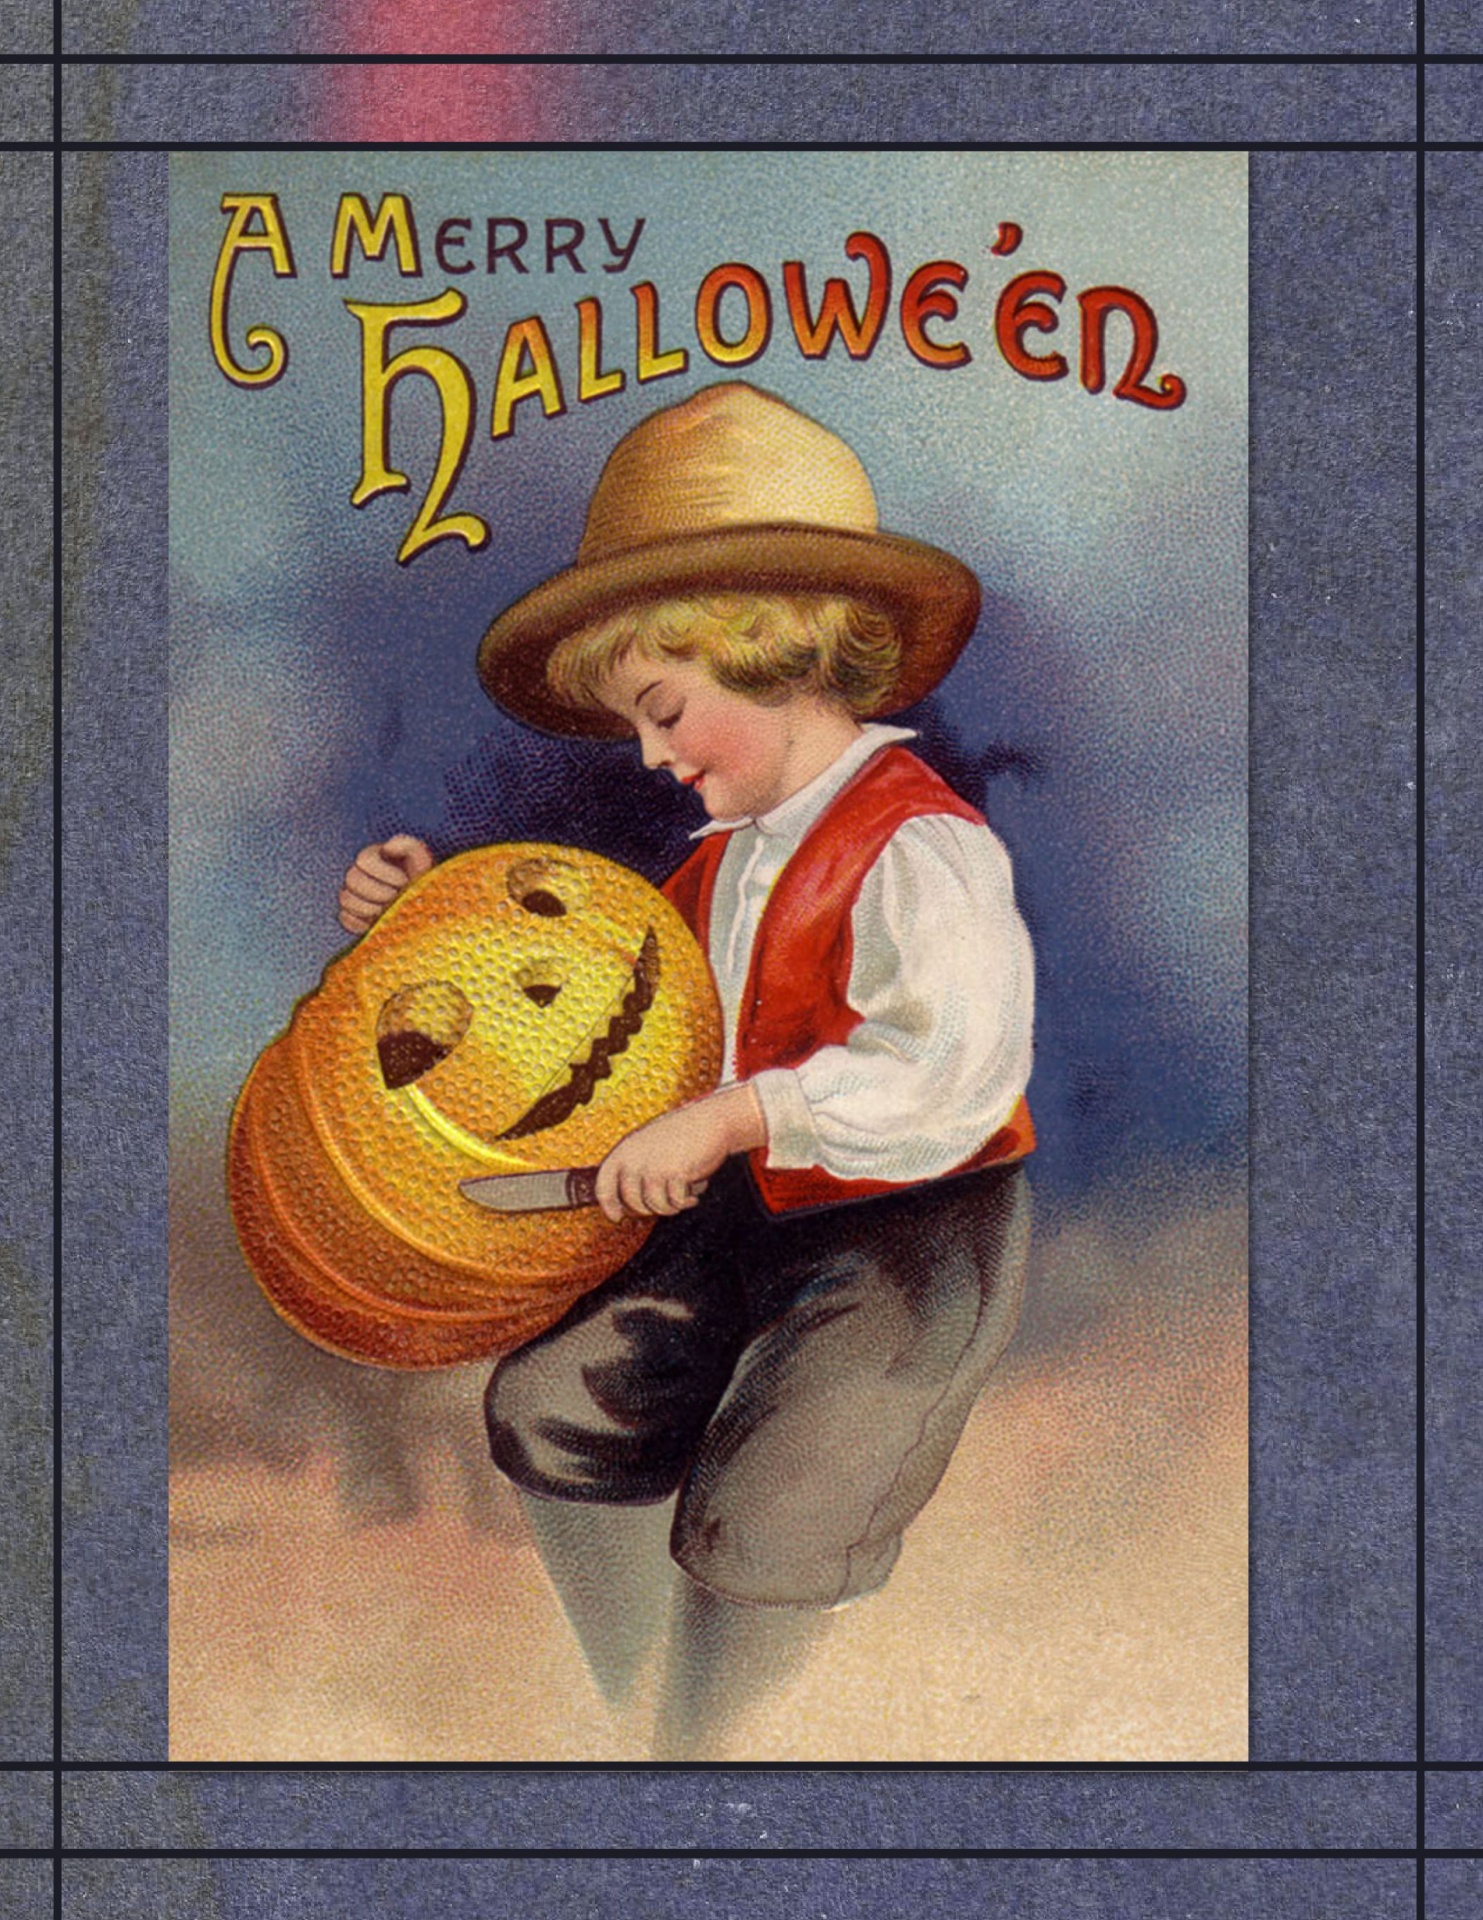 vintage Halloween Poster featuring a little boy with a pumpkin